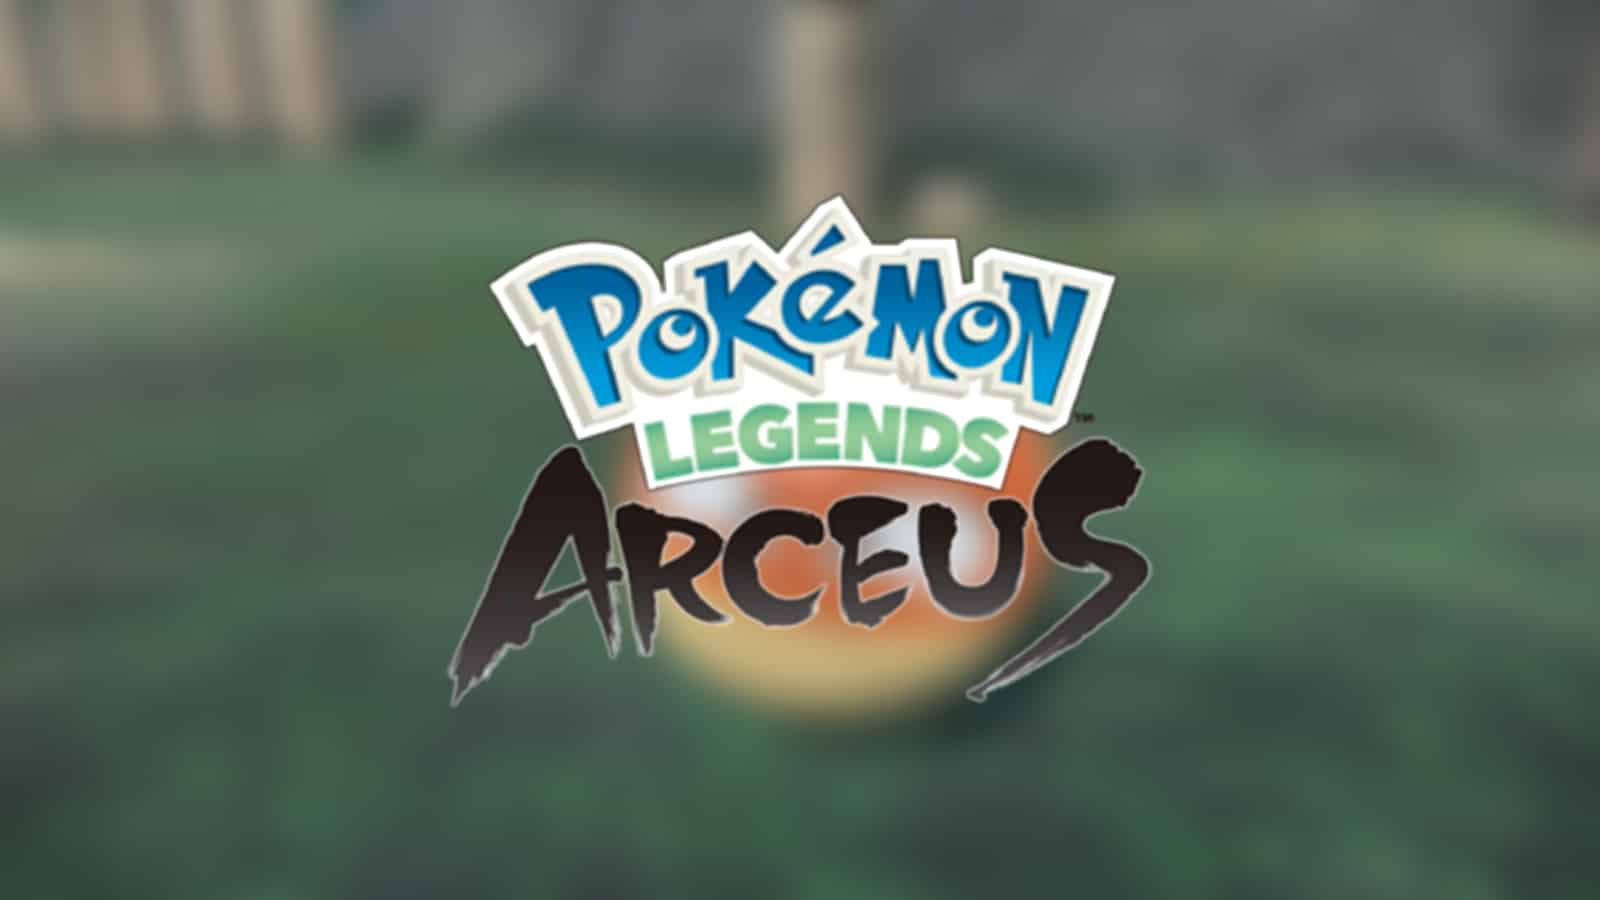 Hisuian Voltorb is coming to Pokemon Go in Pokemon Legends Arceus crossover  - Dexerto